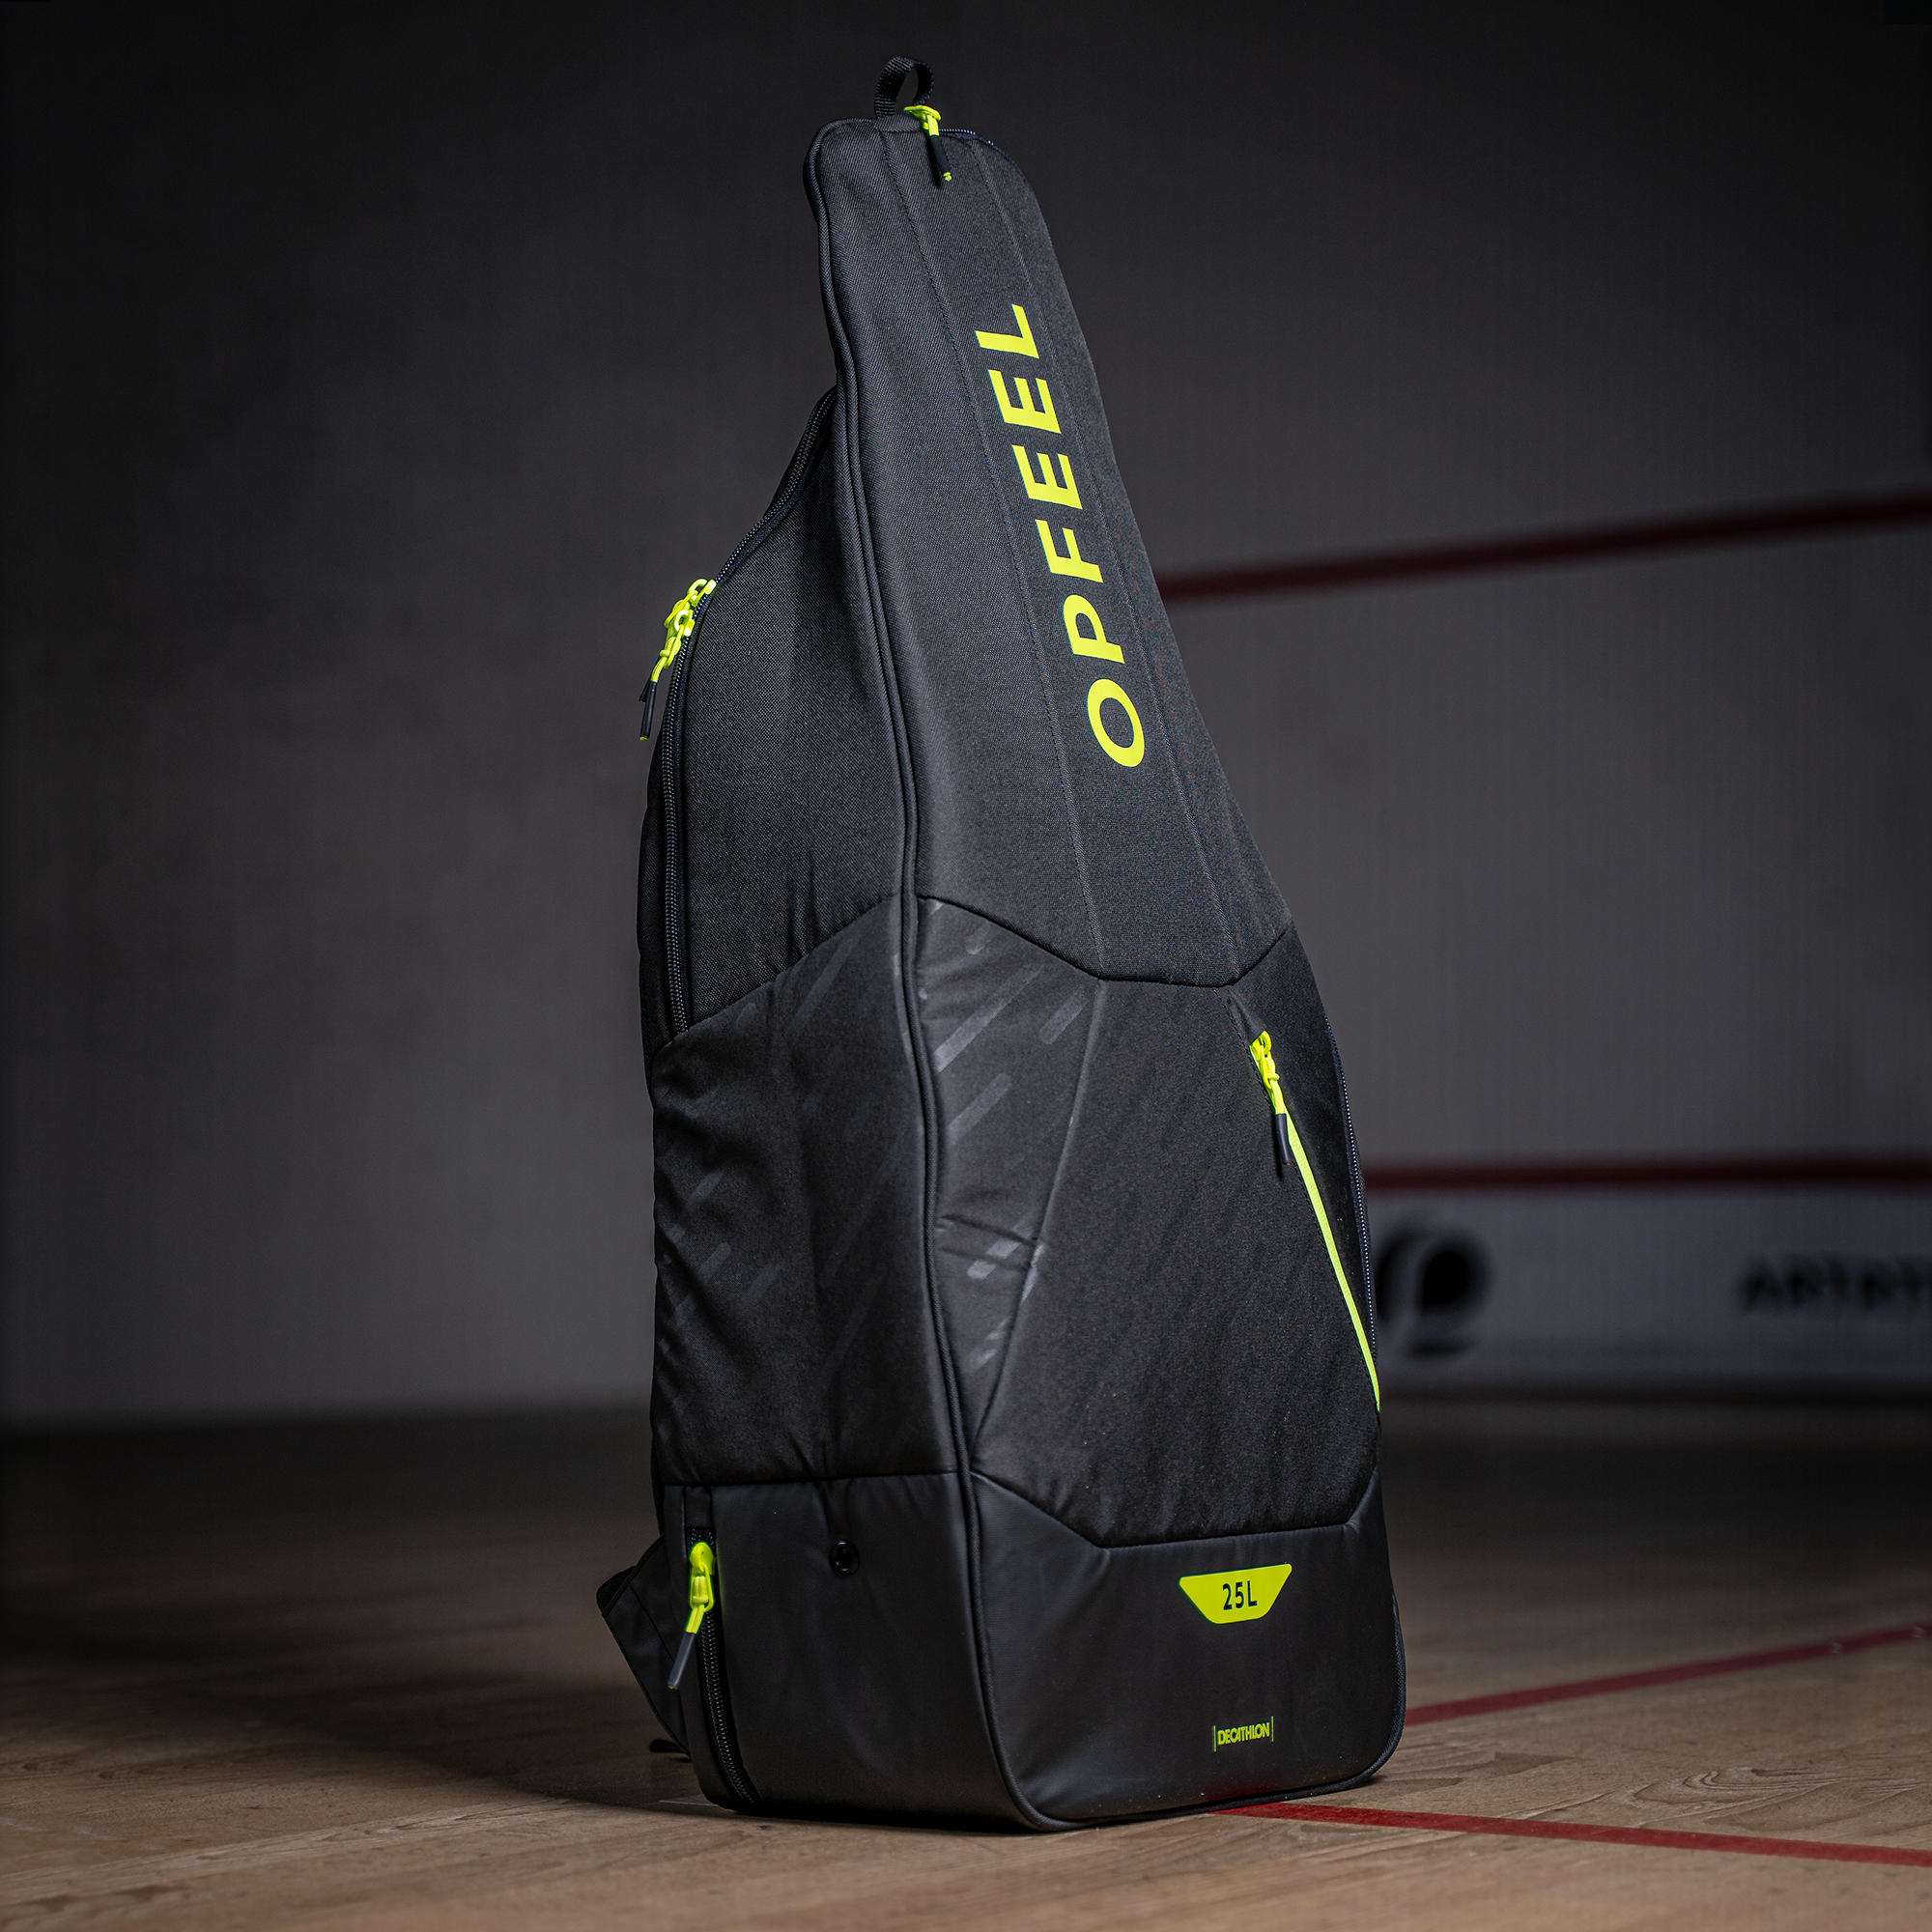 SL560 25L Squash Backpack - No Size By OPFEEL | Decathlon